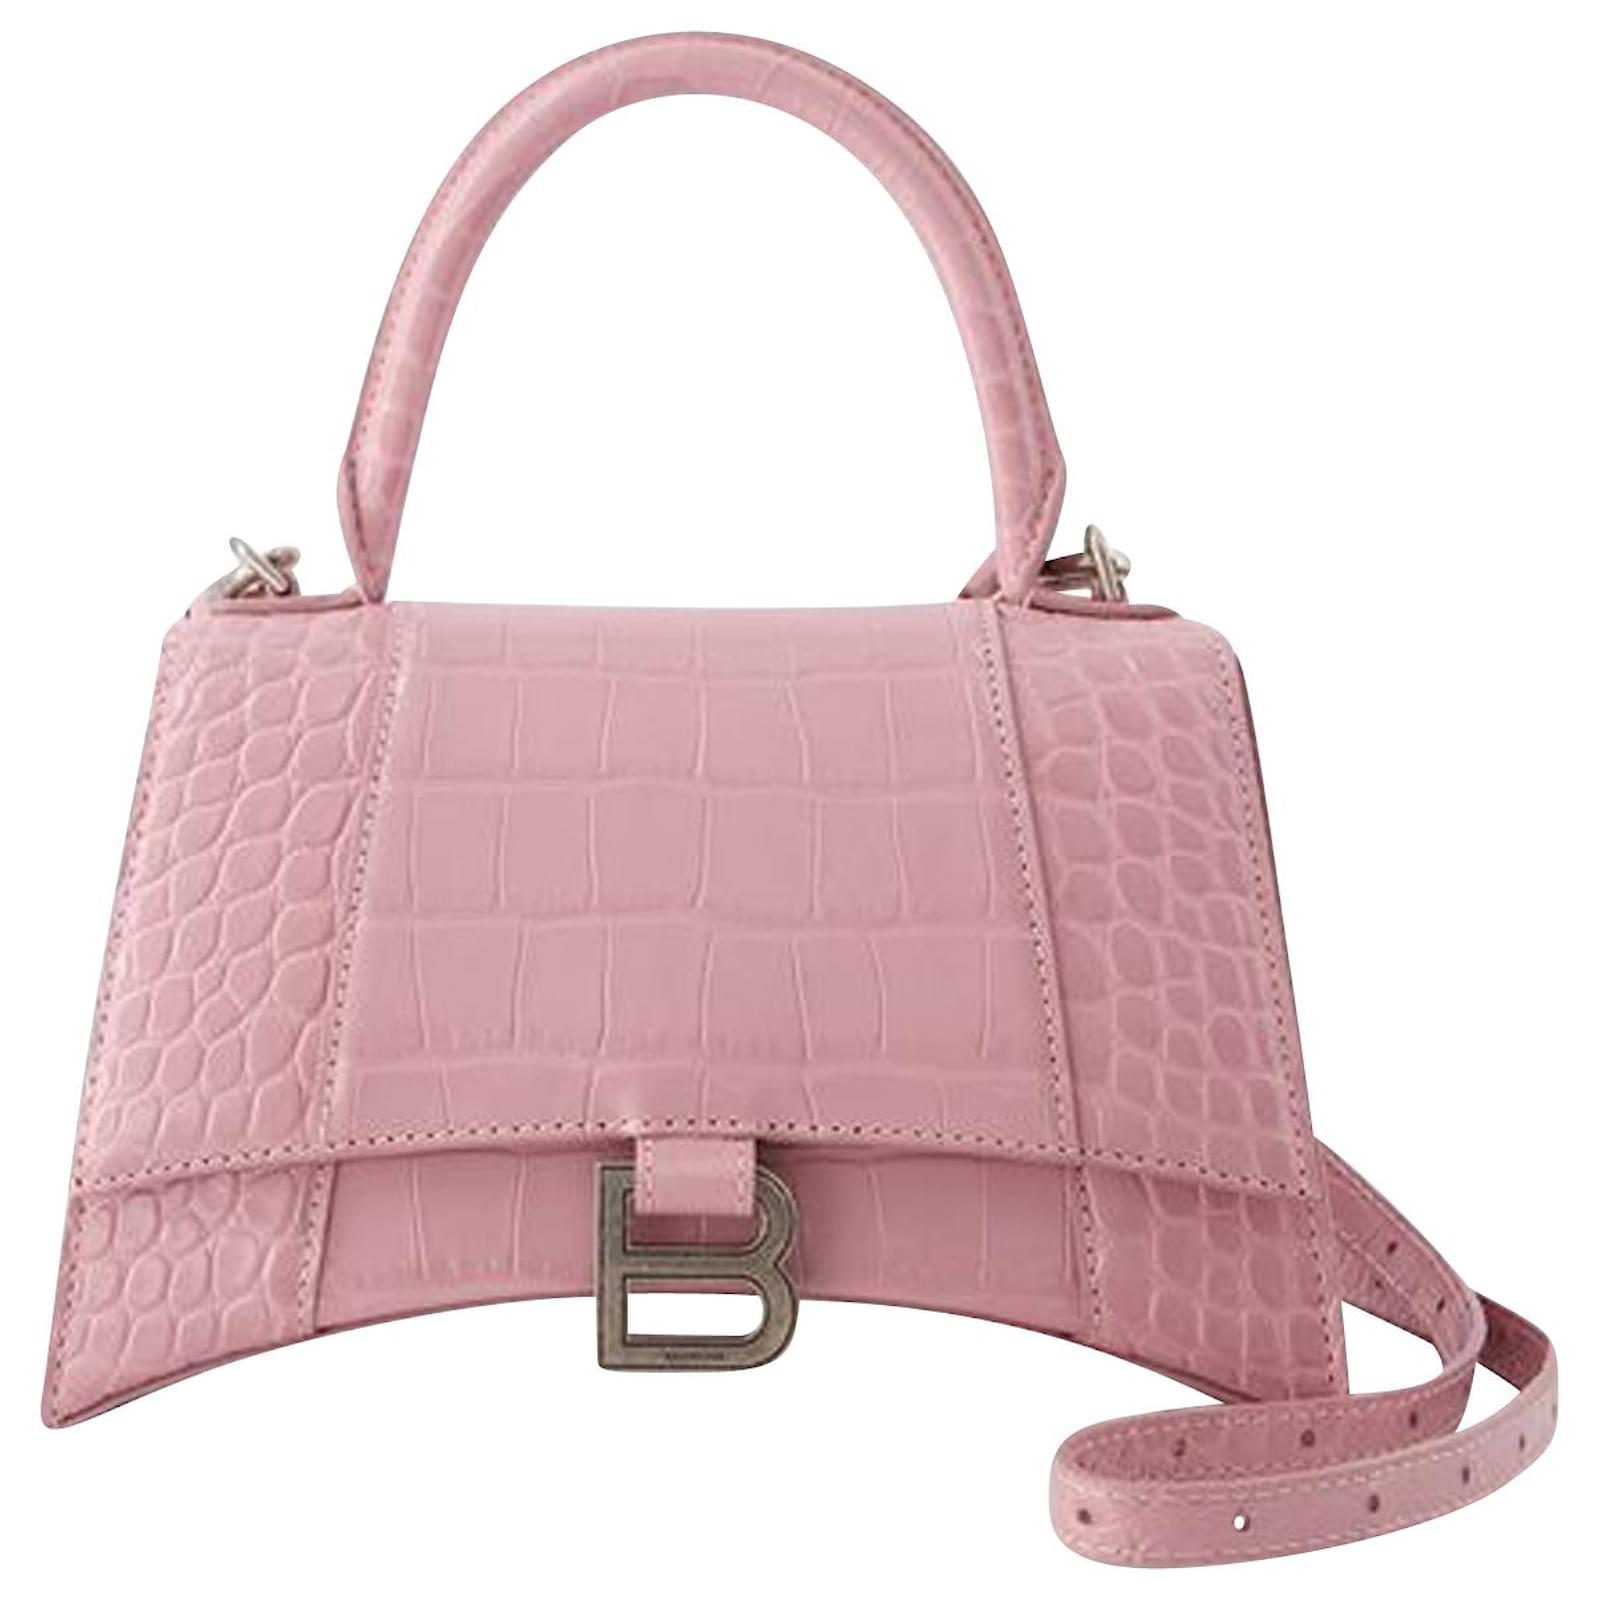 Hourglass S Bag - Balenciaga - Leather - Powder Pink Pony-style ...